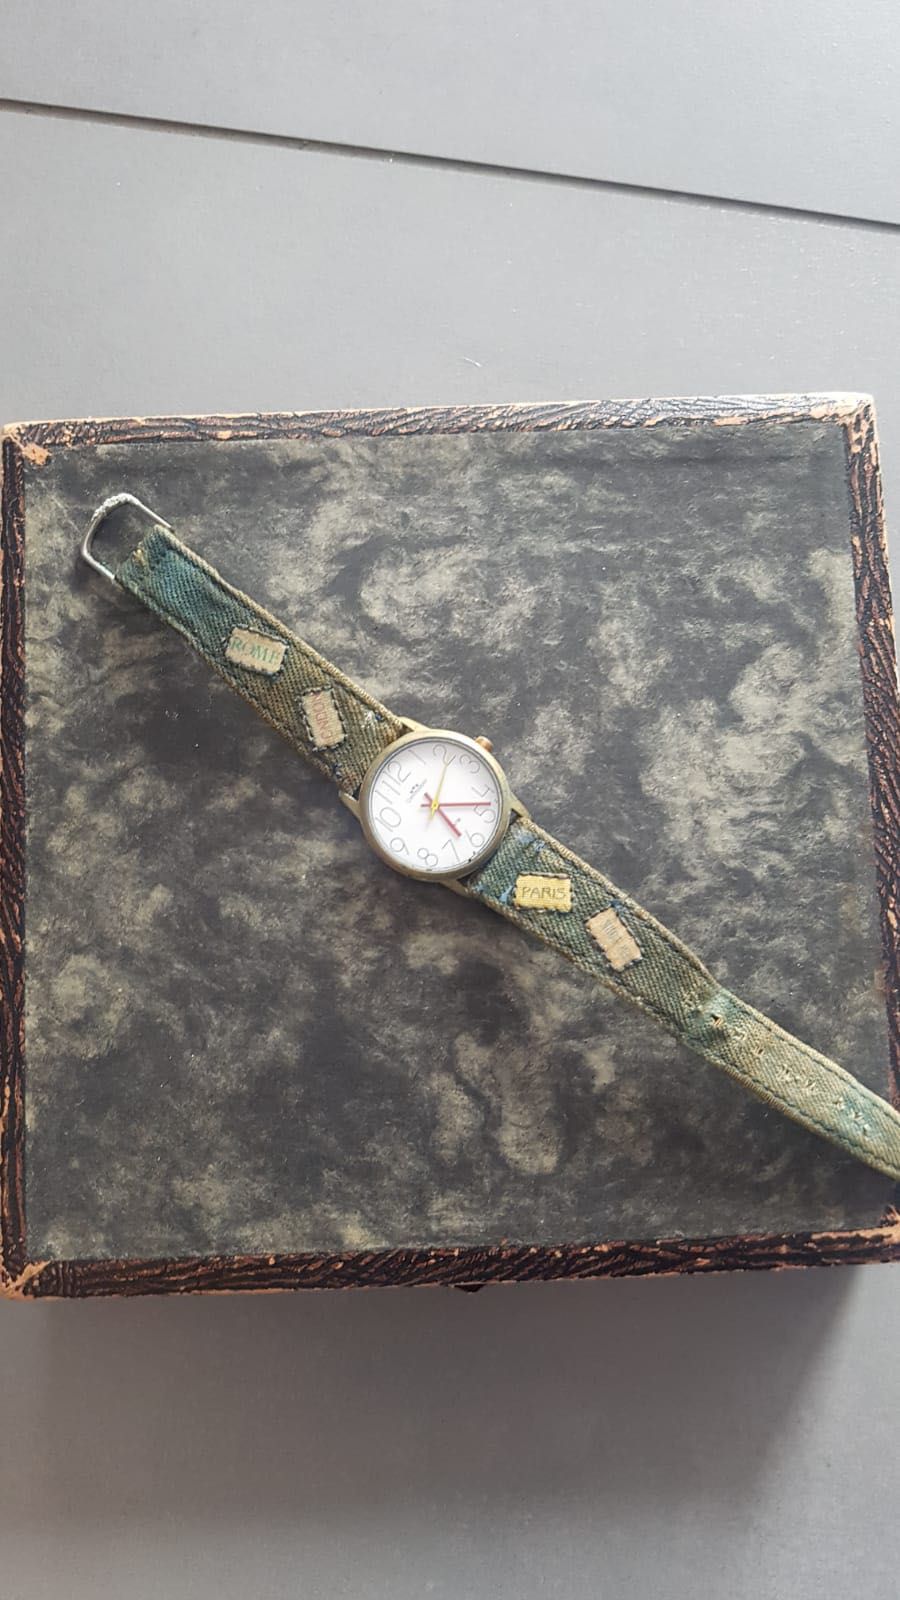 Zegarek męski damski unsex commodoor 116.6002 atm stary kolekcja